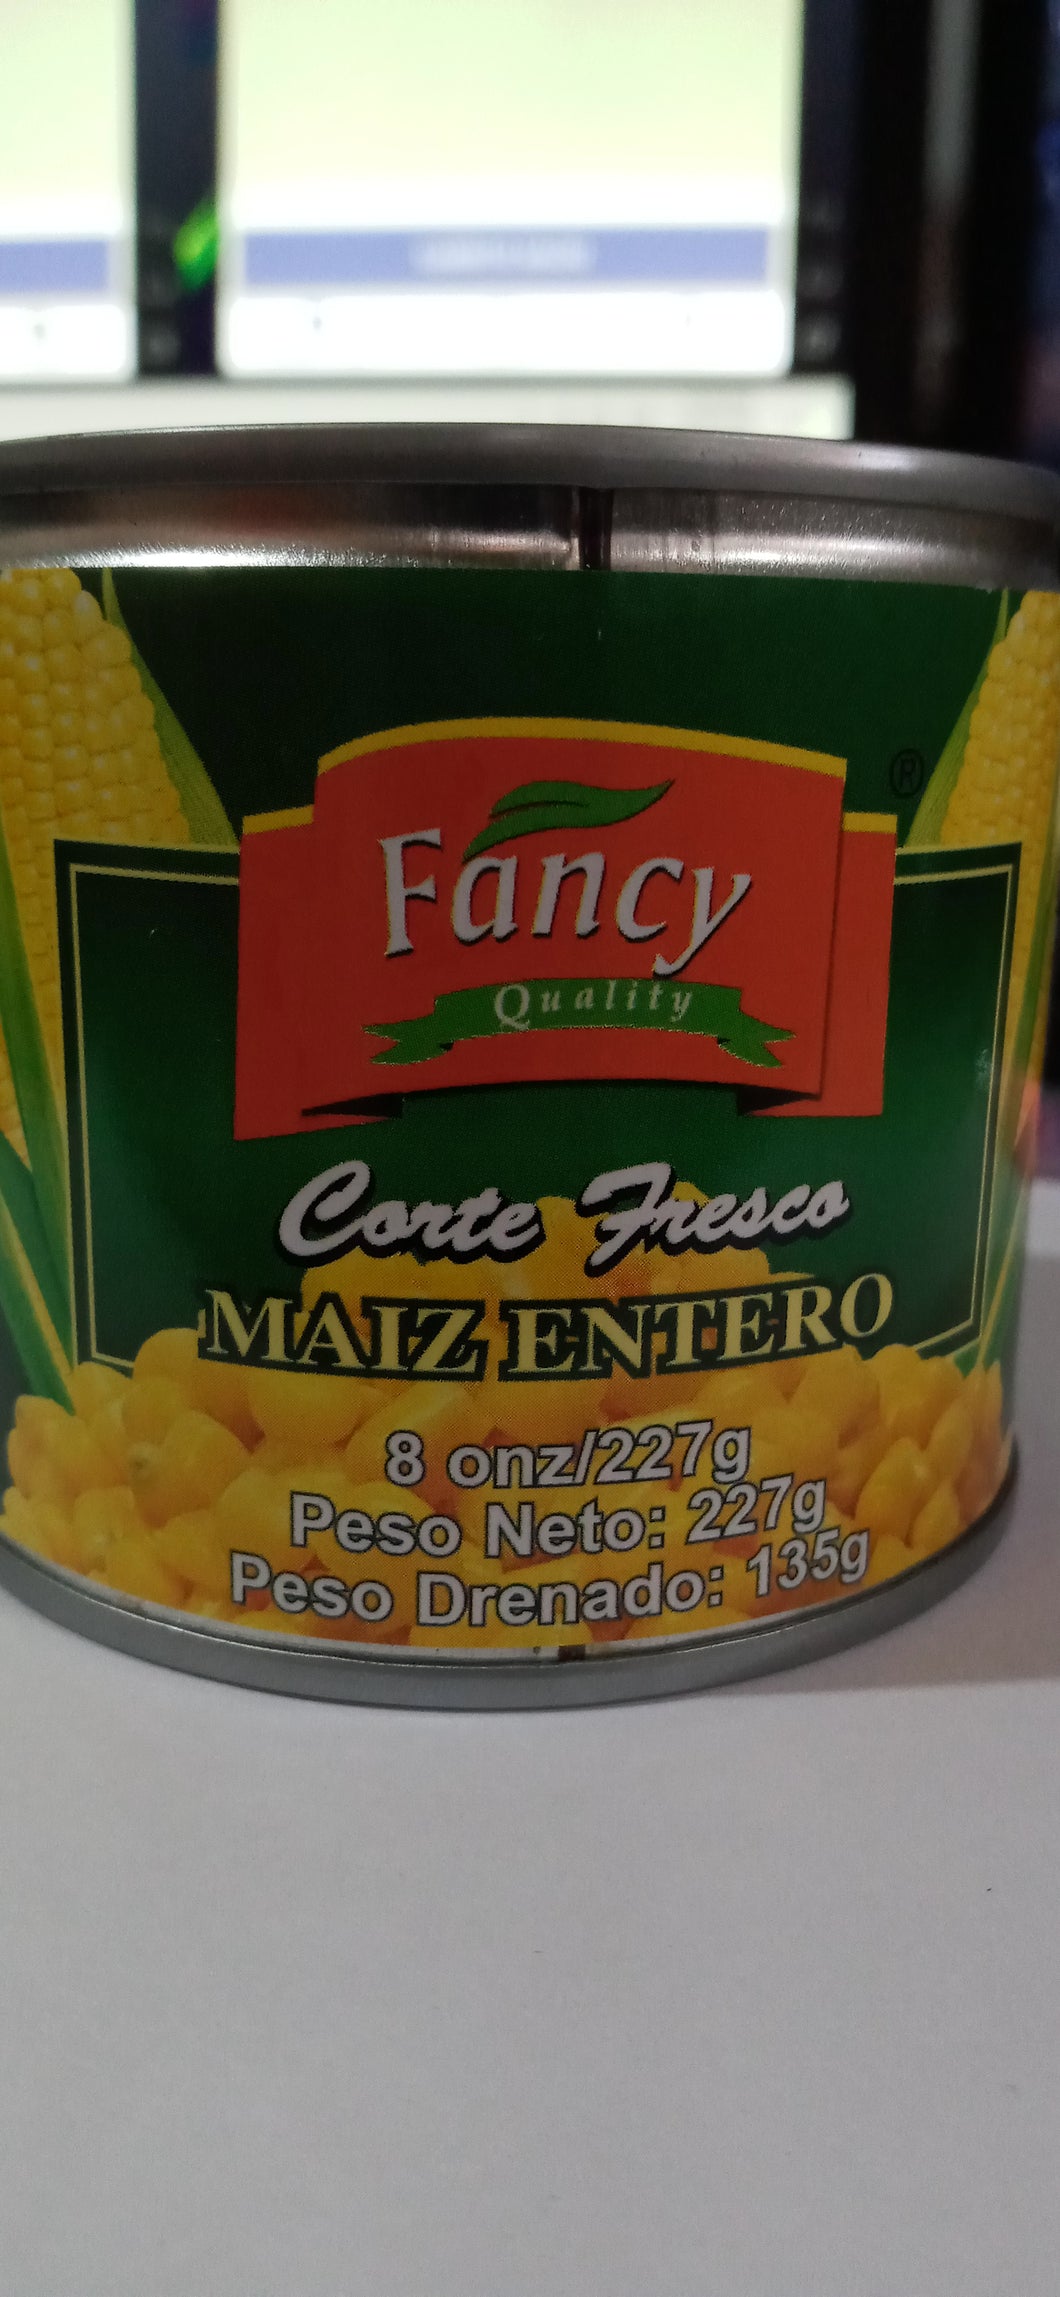 Maiz entero fancy 8oz (227g)